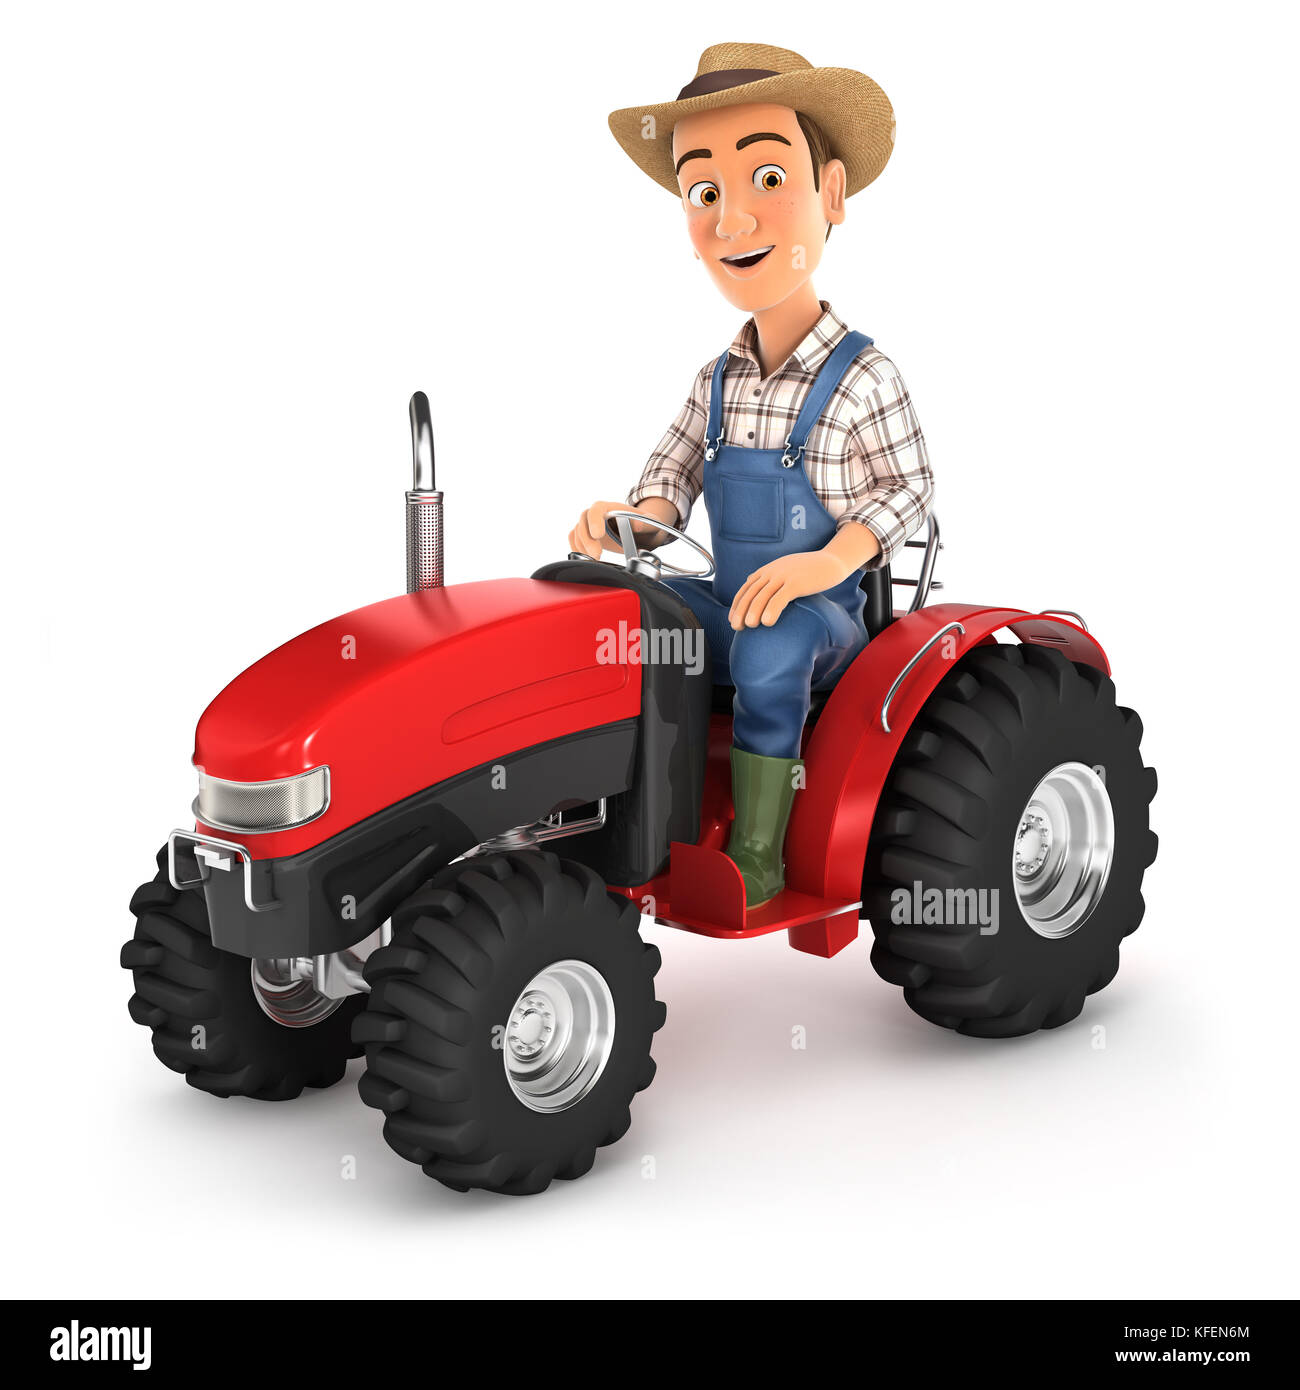 Cartoon traktor -Fotos und -Bildmaterial in hoher Auflösung – Alamy